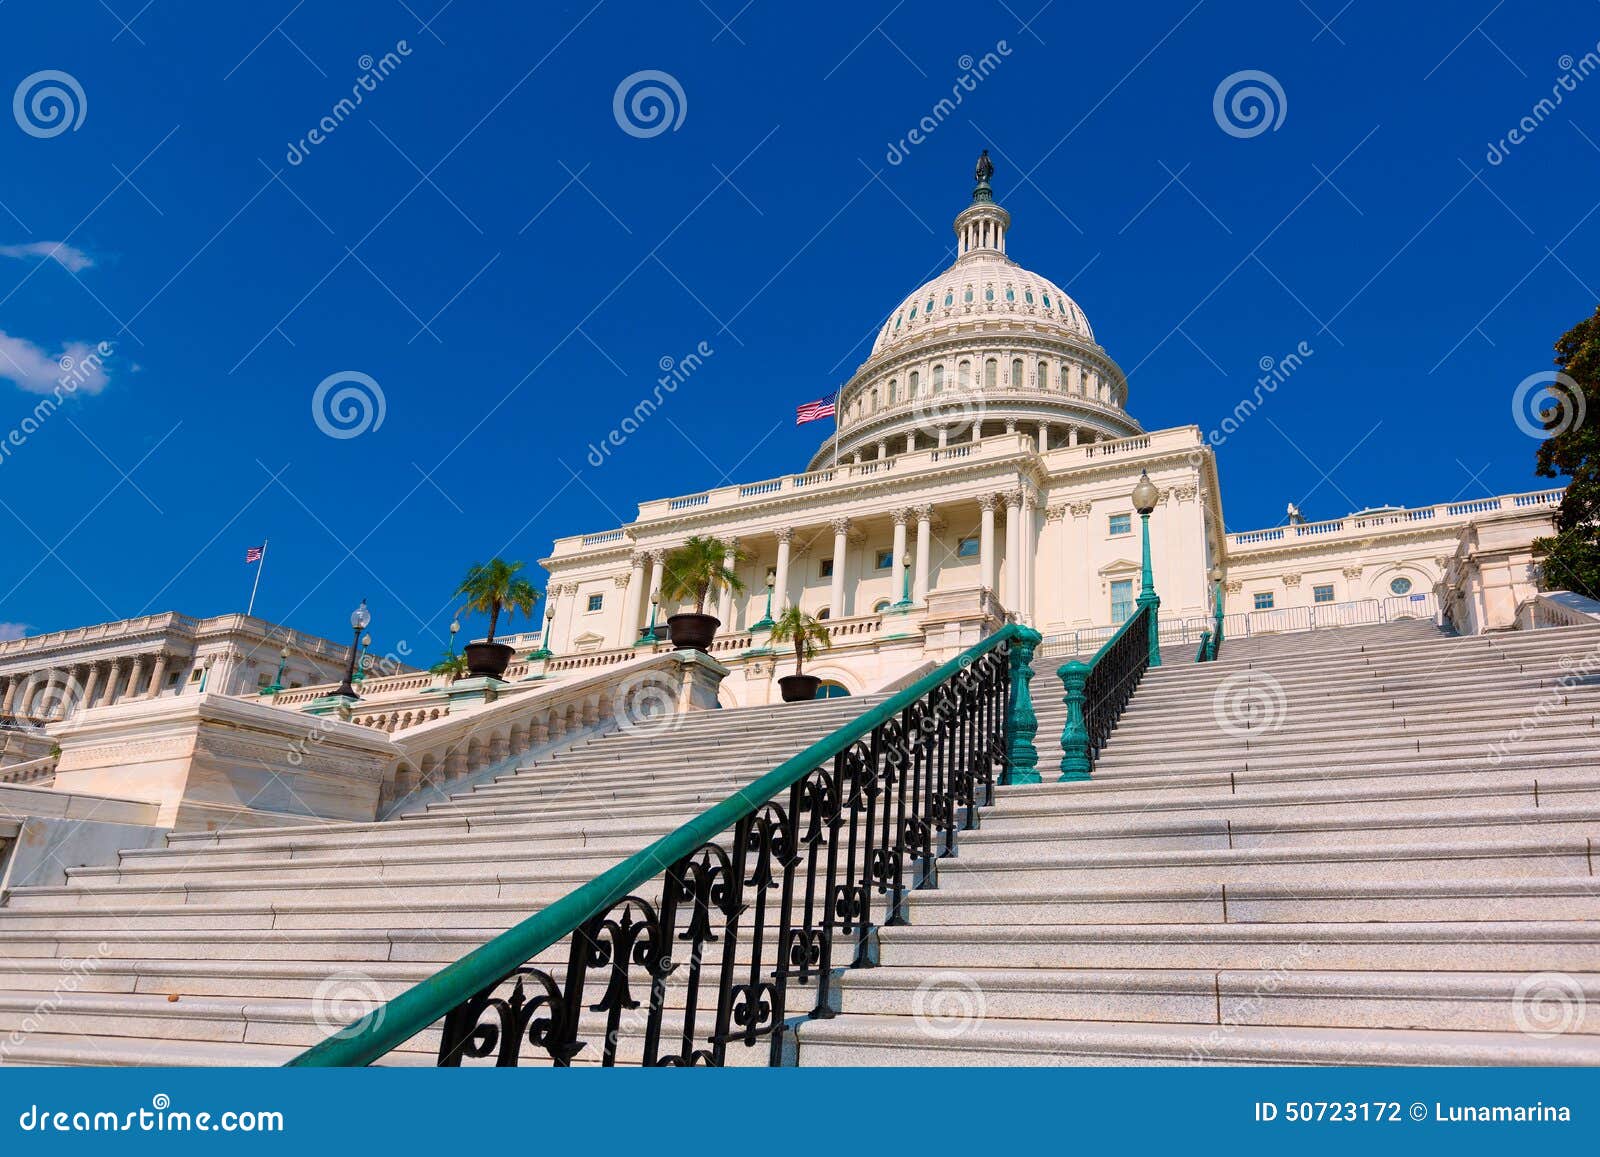 capitol building washington dc usa congress